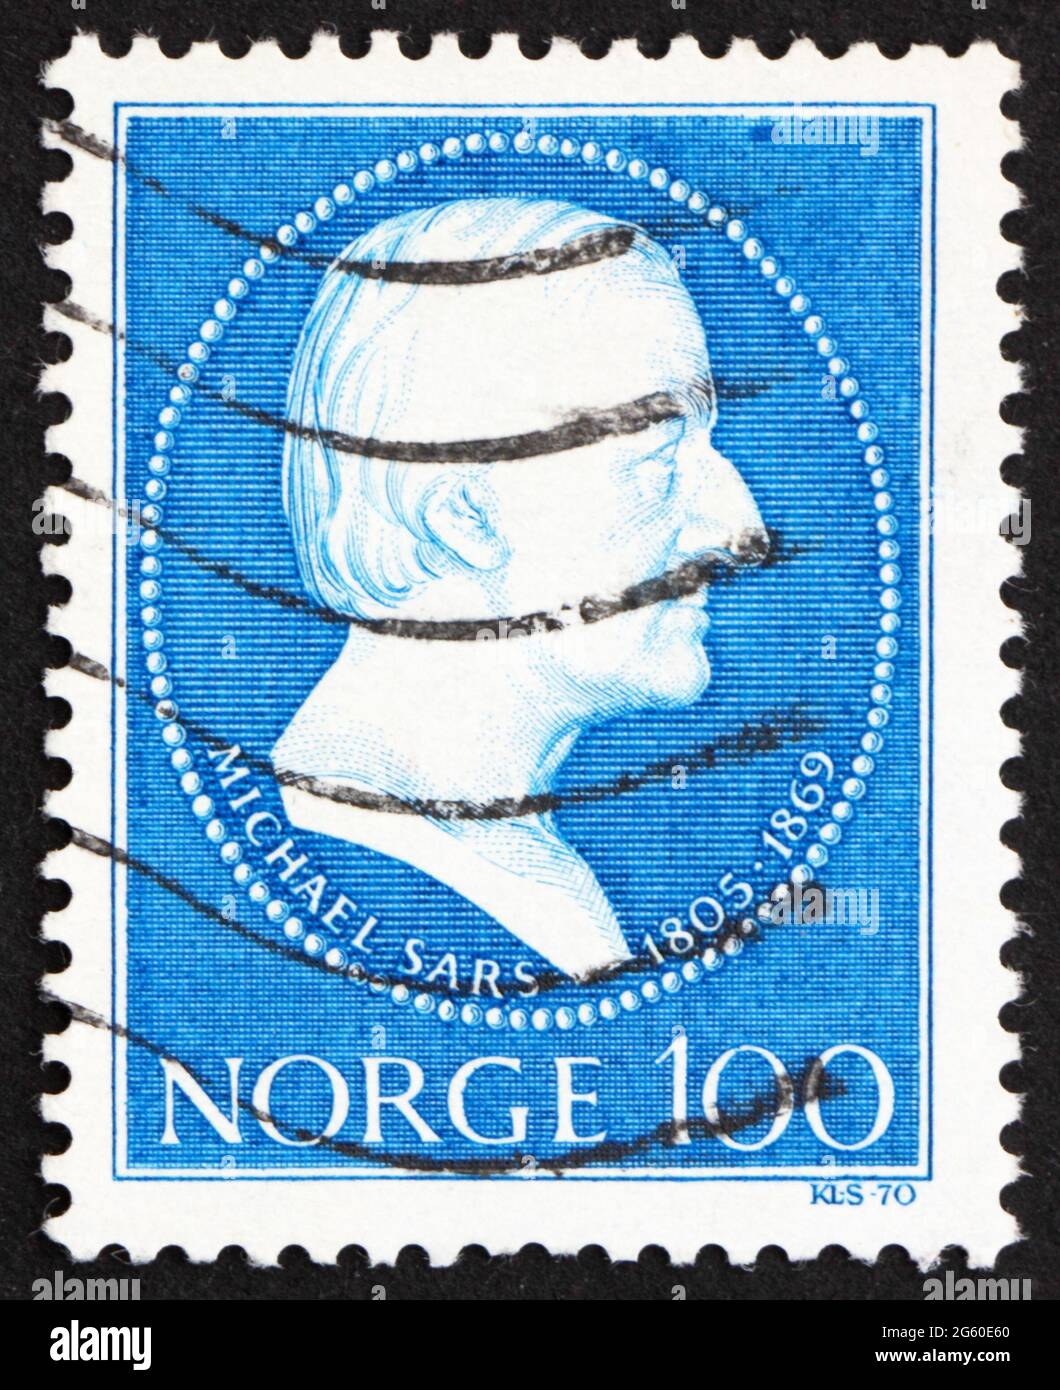 NORWEGEN - UM 1970: Eine in Norwegen gedruckte Briefmarke zeigt Michael SARS, Zoologe, um 1970 Stockfoto